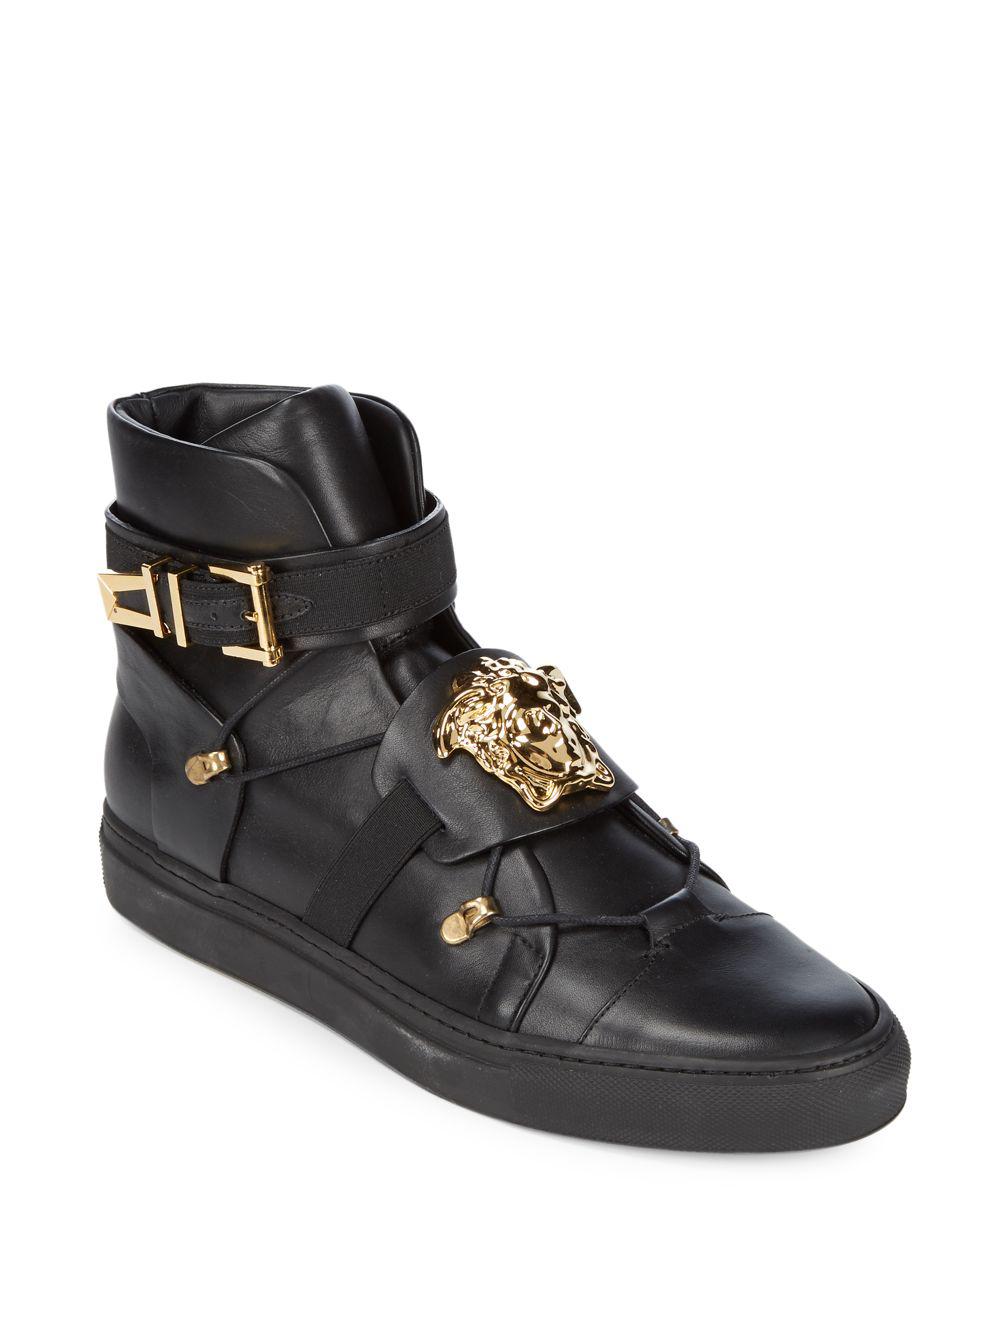 Versace Vitello Leather Sneakers in Black | Lyst